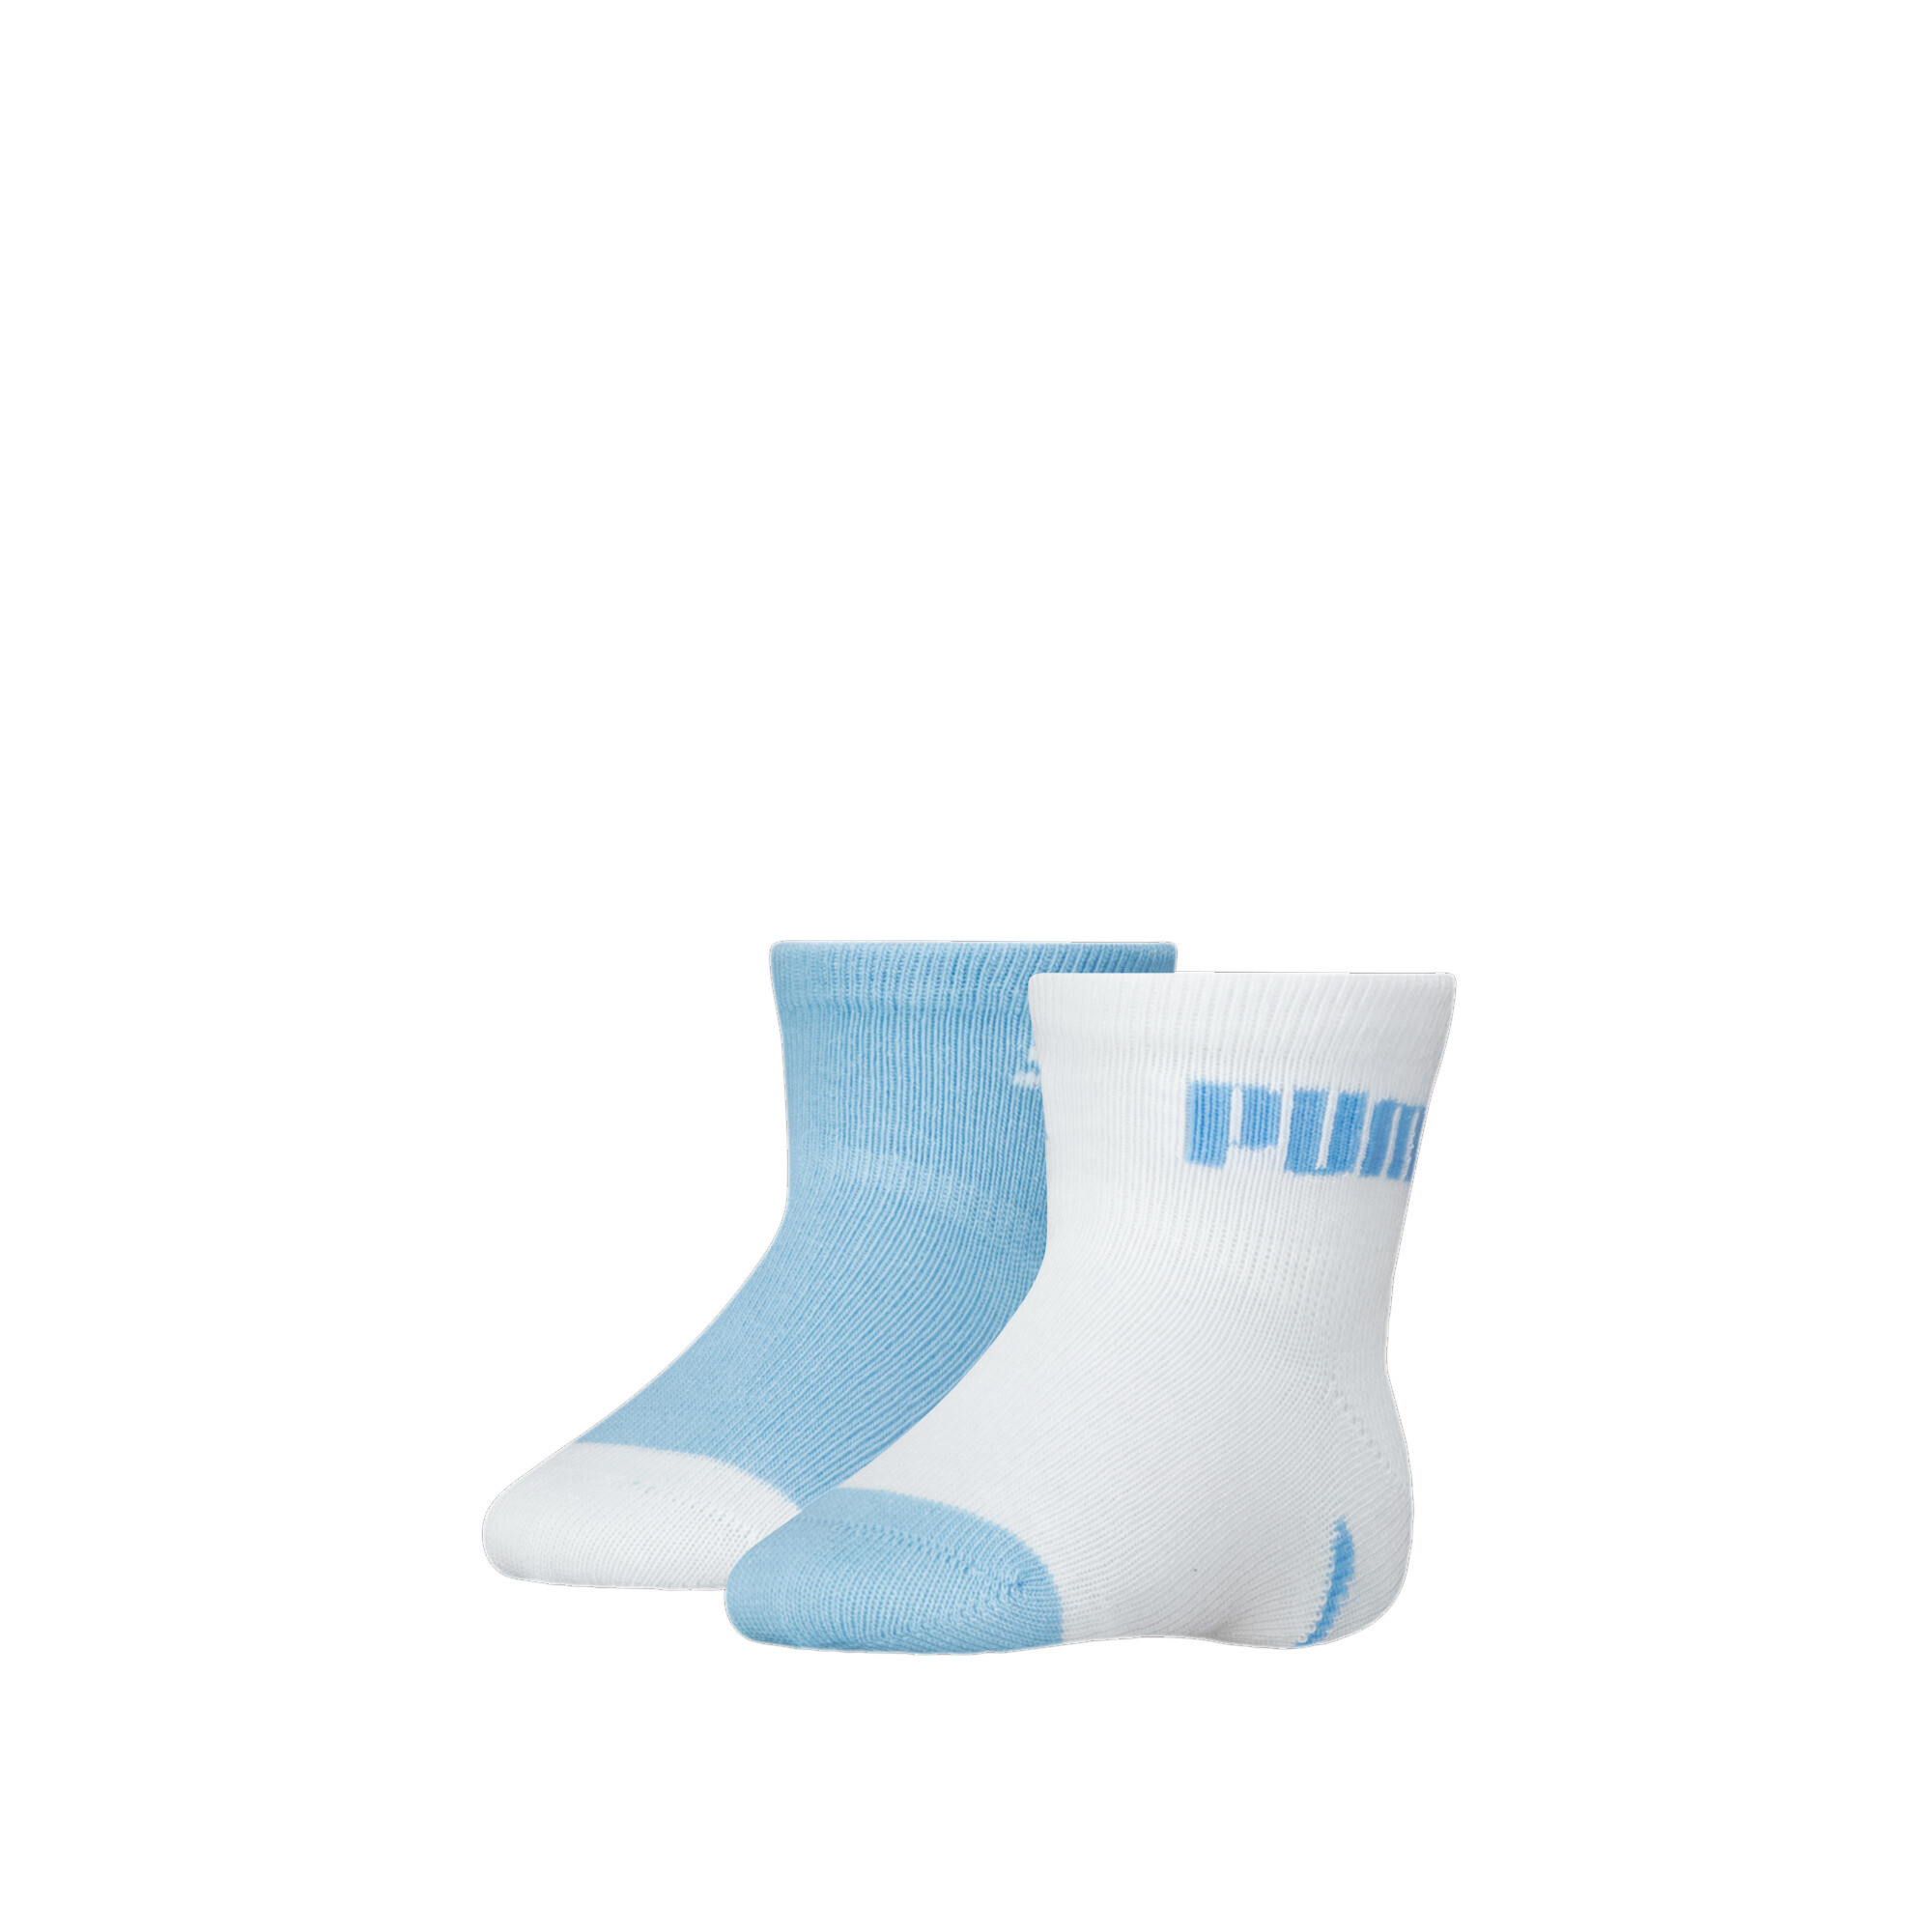 Puma Baby Classic Socks 2 Pack, Blue, Size 23-26, Age